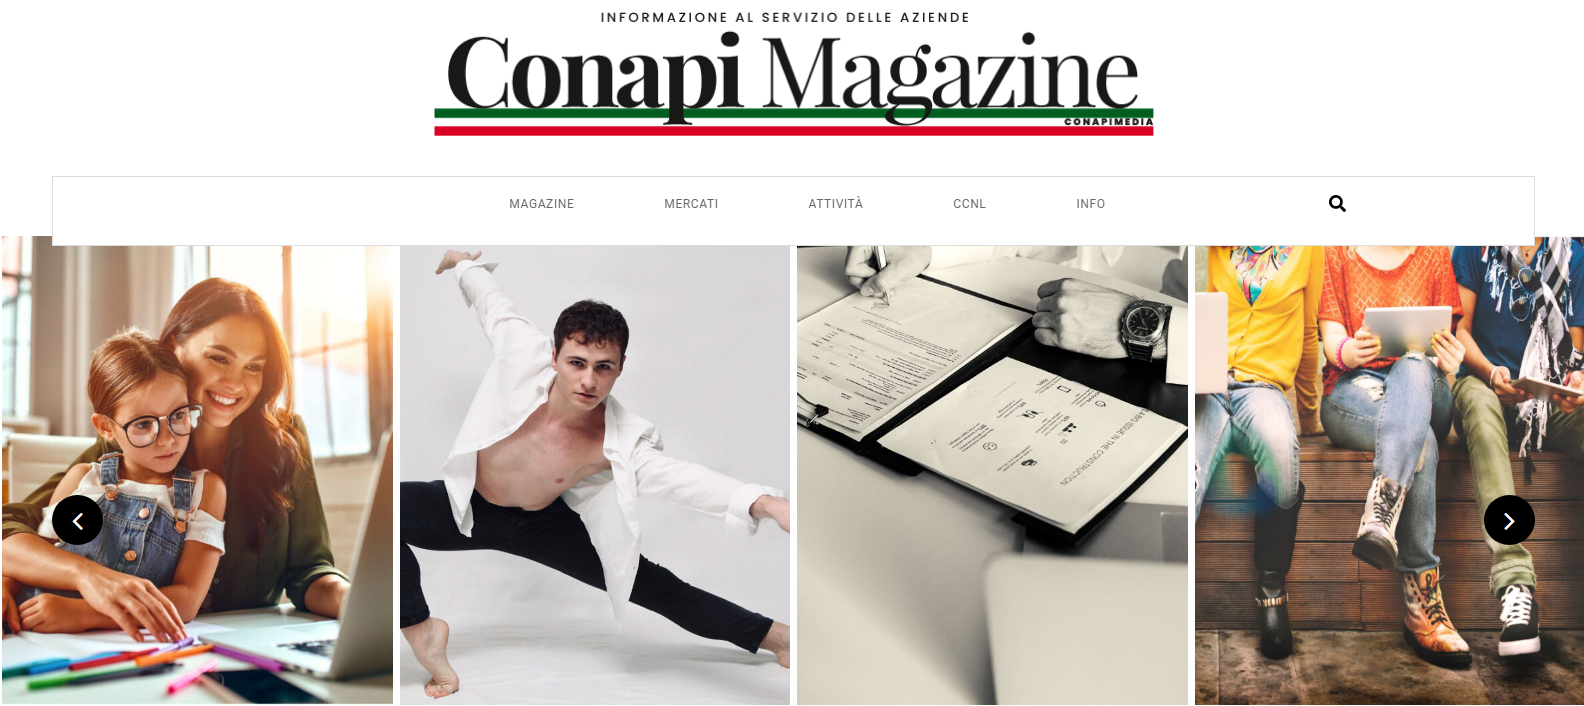 Conapi Magazine